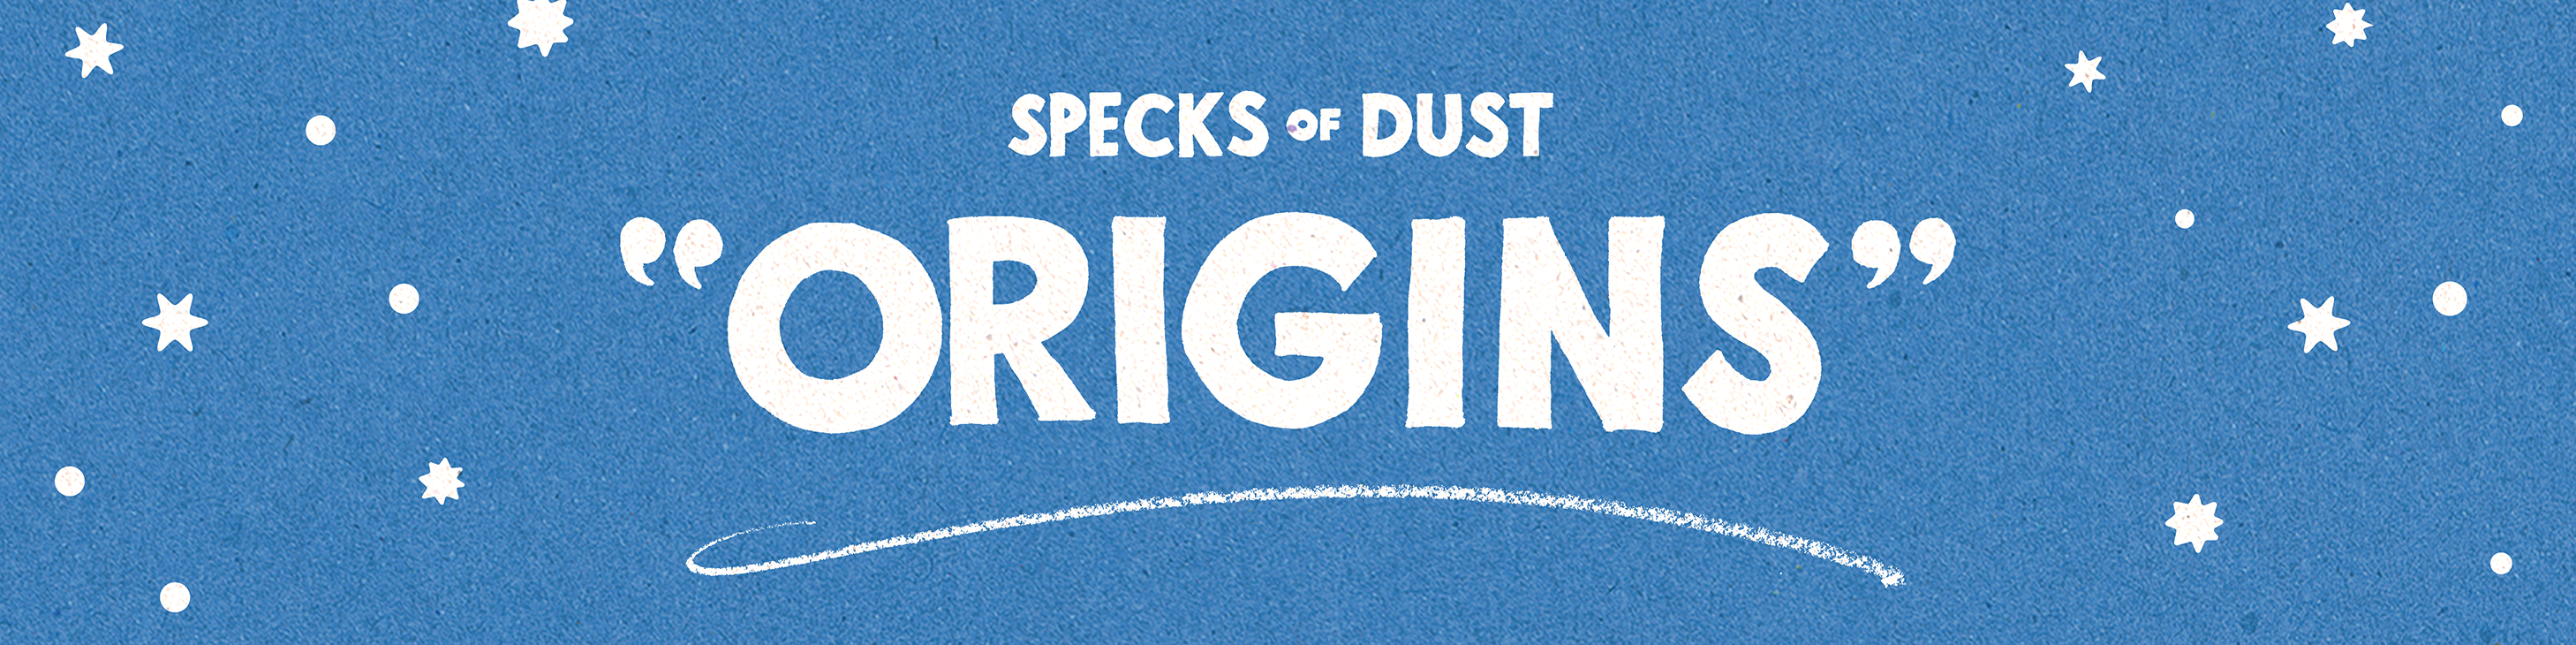 Specks of Dust Origins